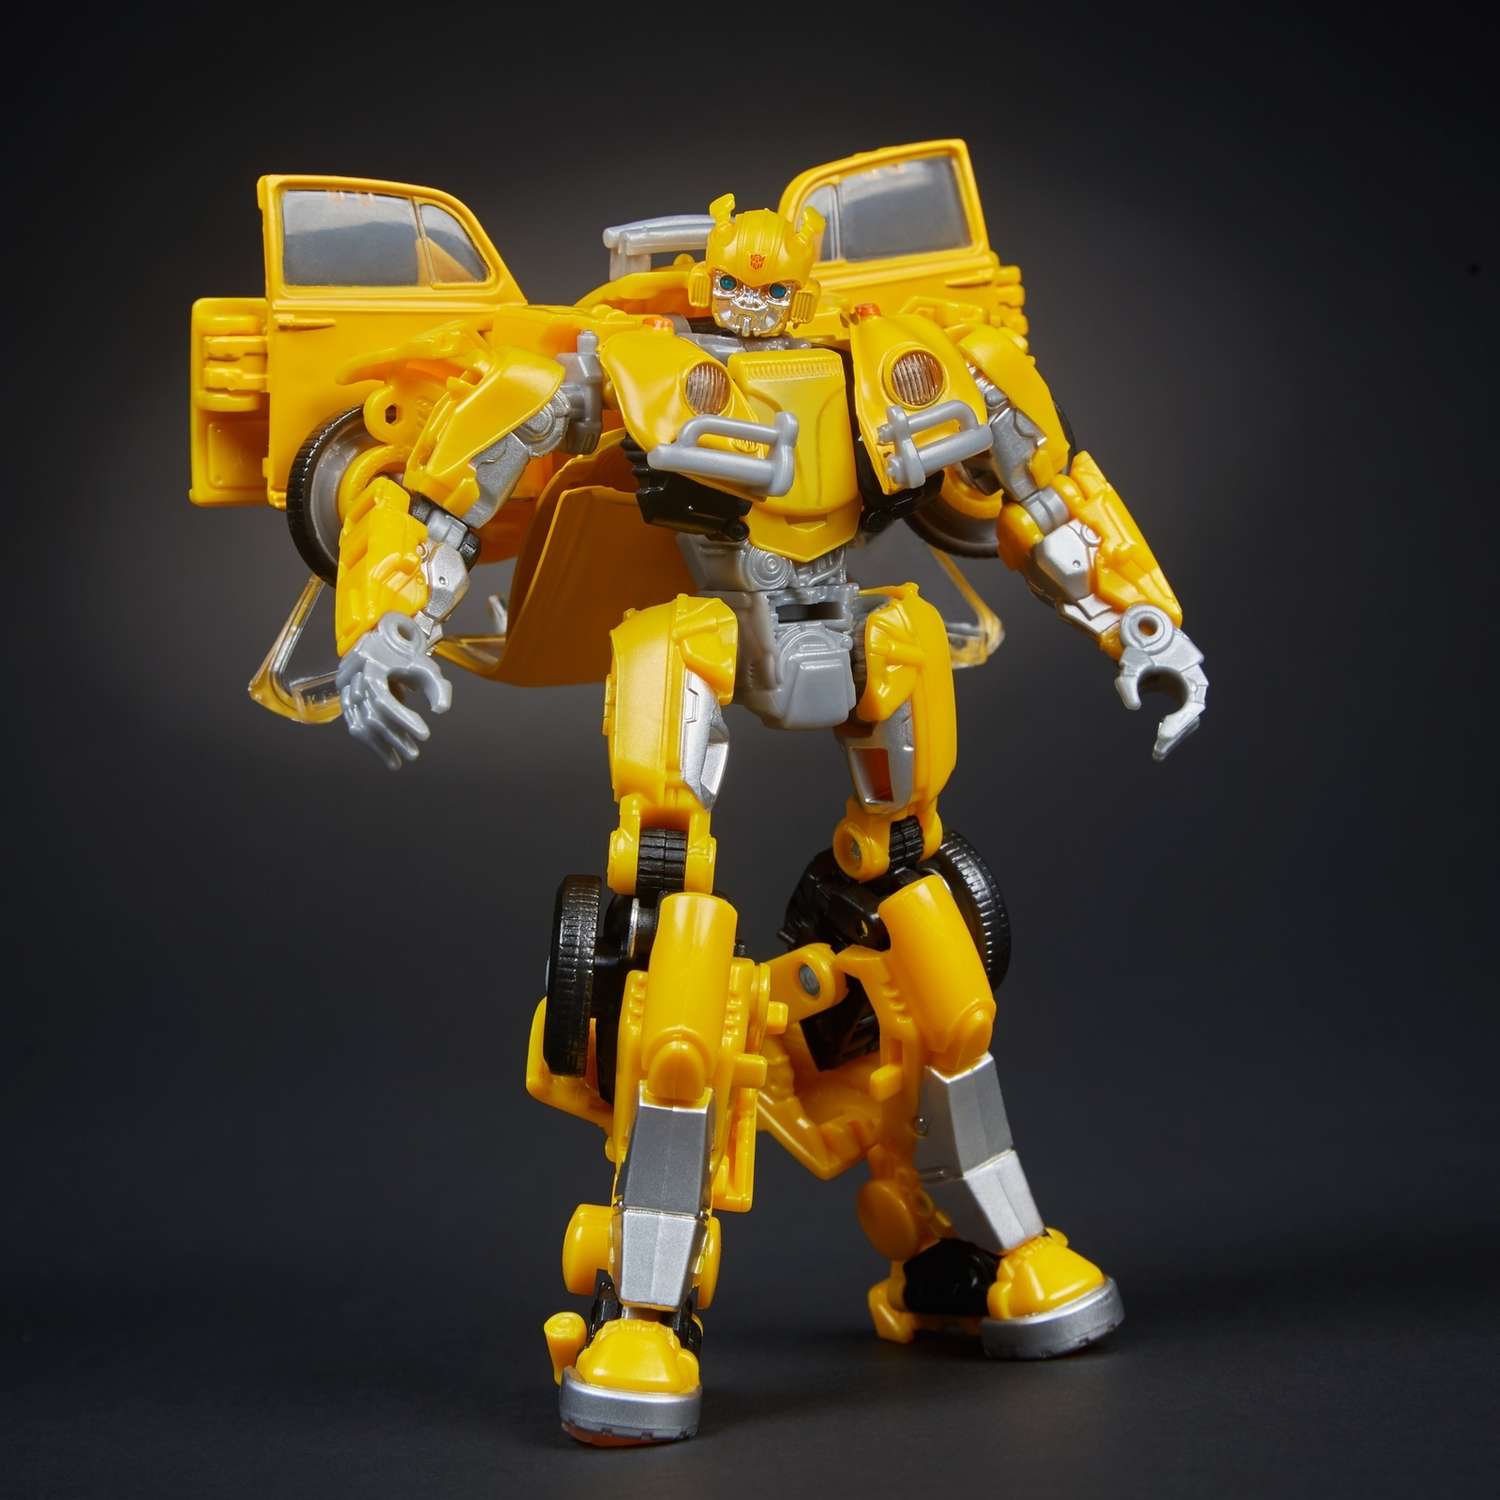 Игрушка Transformers Дженерейшнз Бамблби E0975EU4 - фото 9